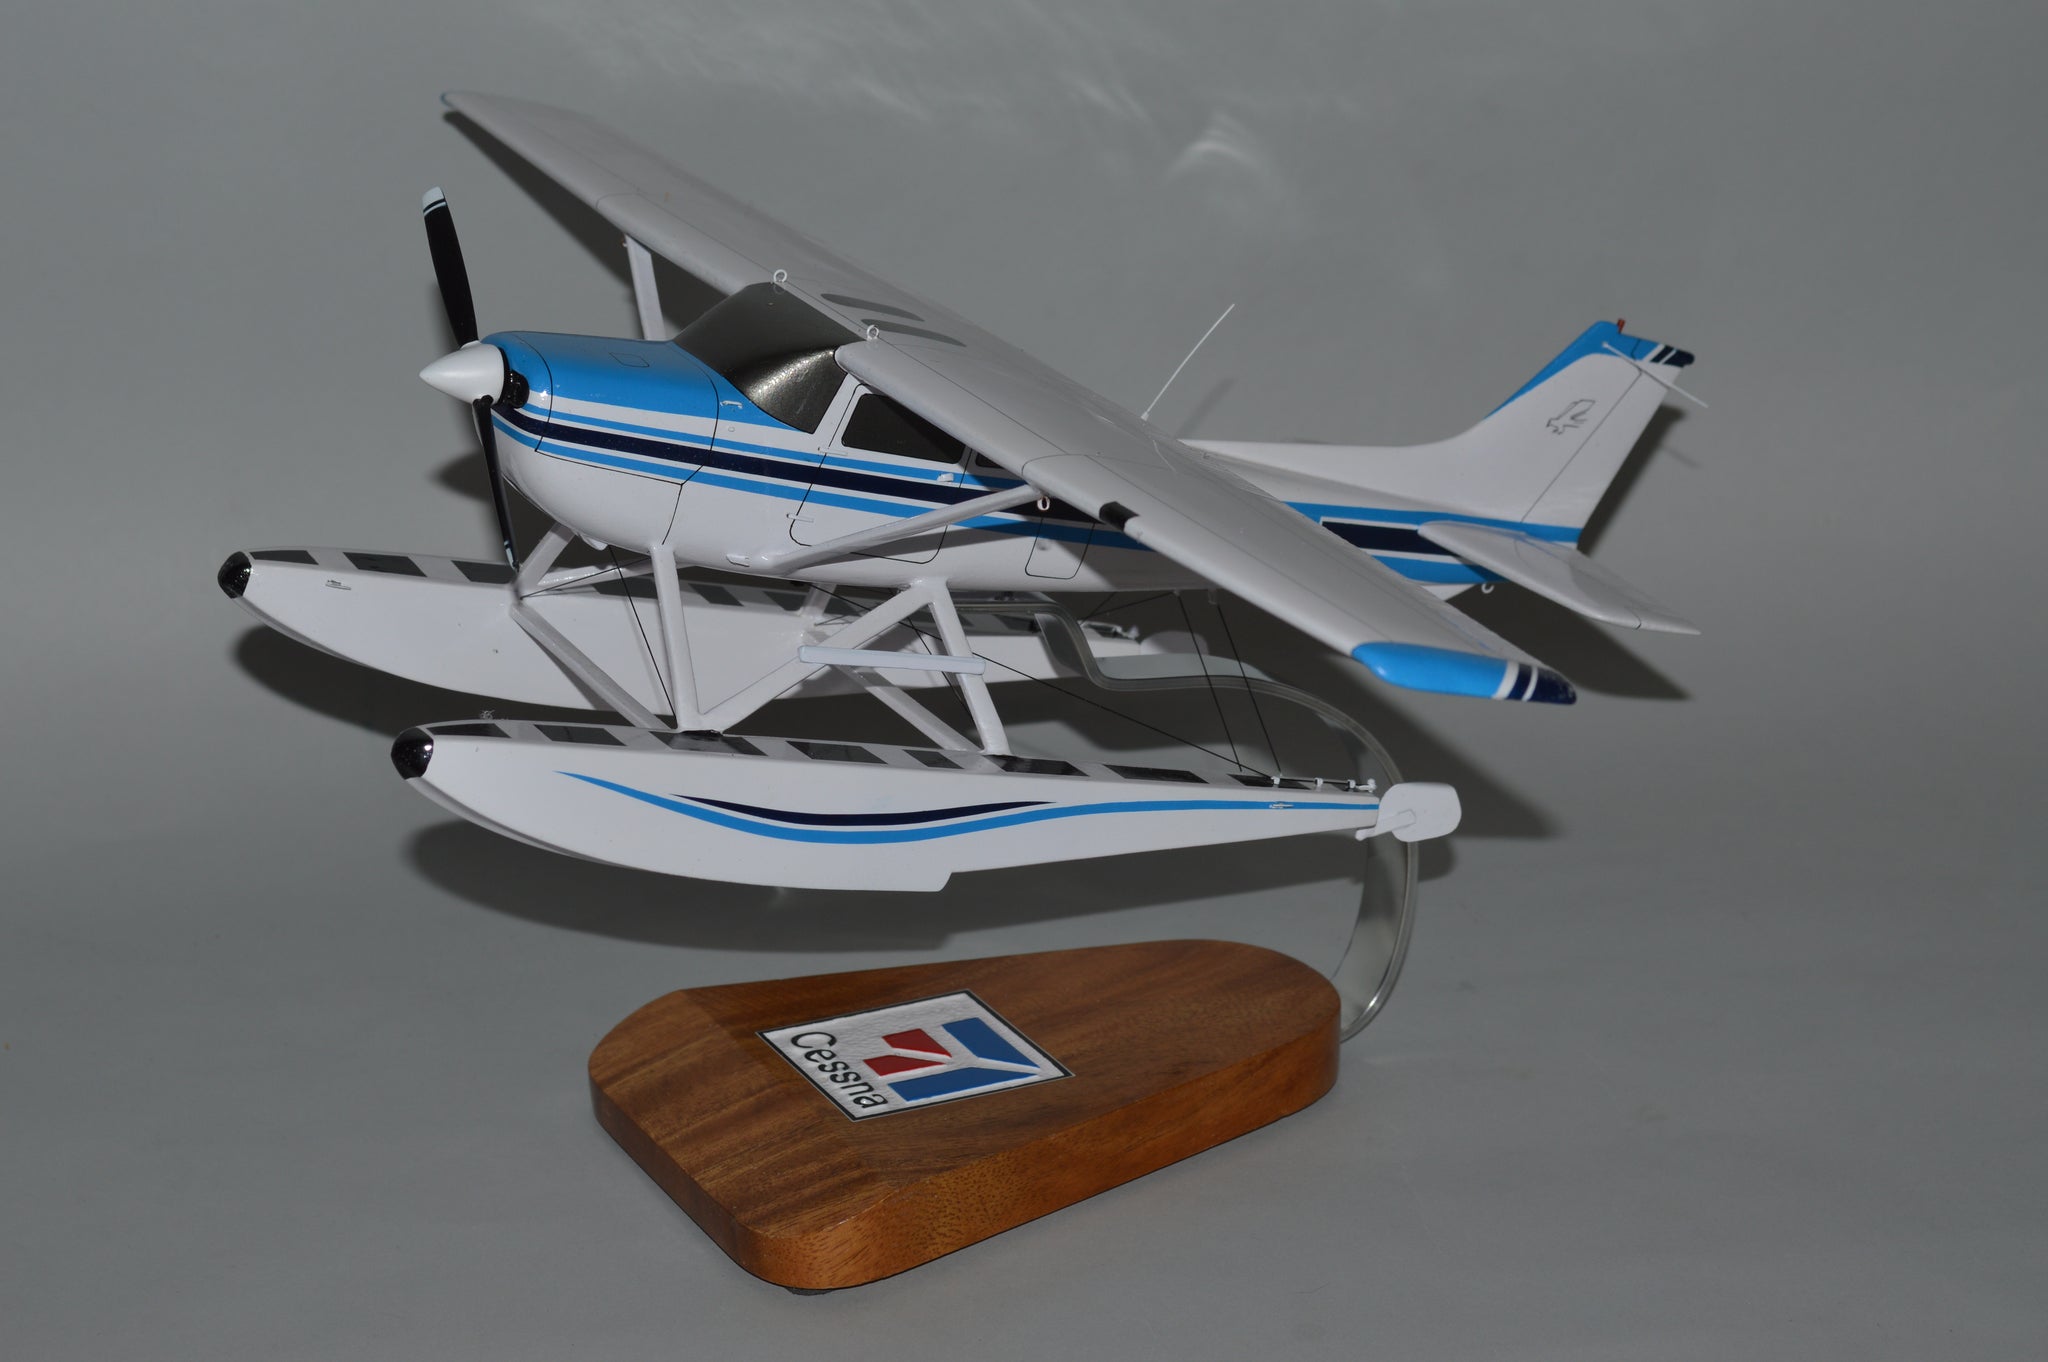 Cessna 172 floatplane desktop model scalecraft